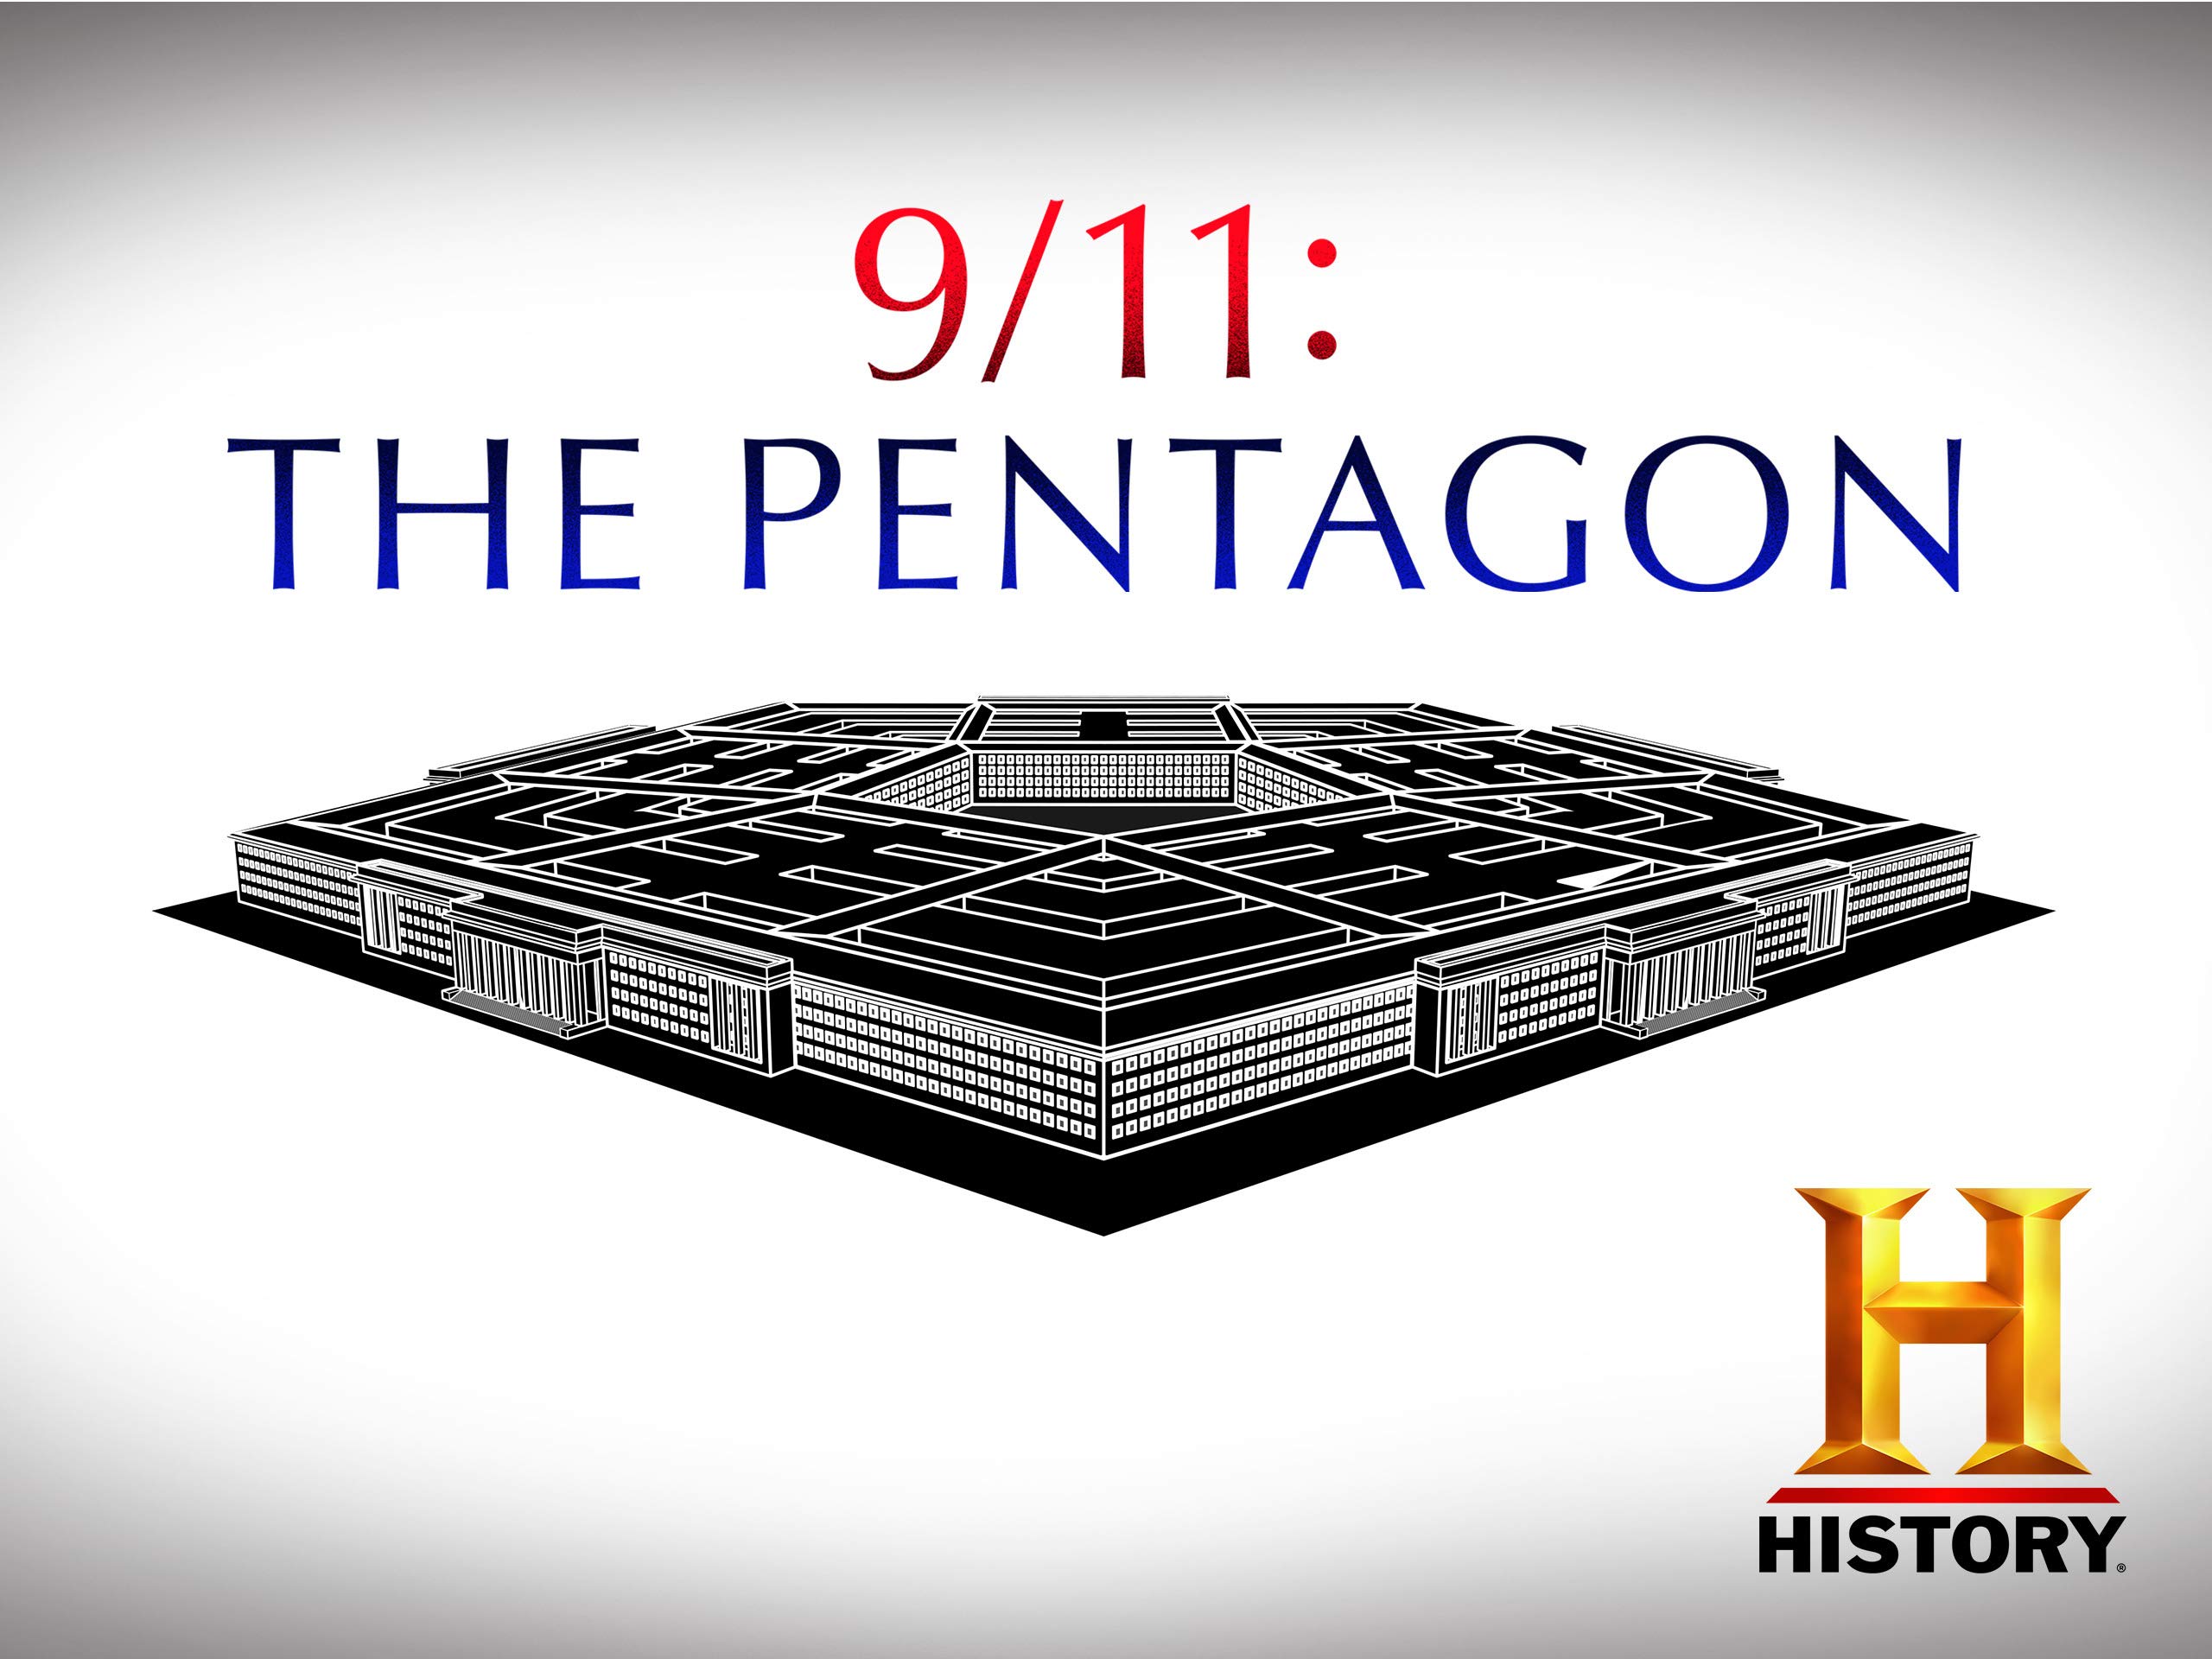 911: A Pentagon online